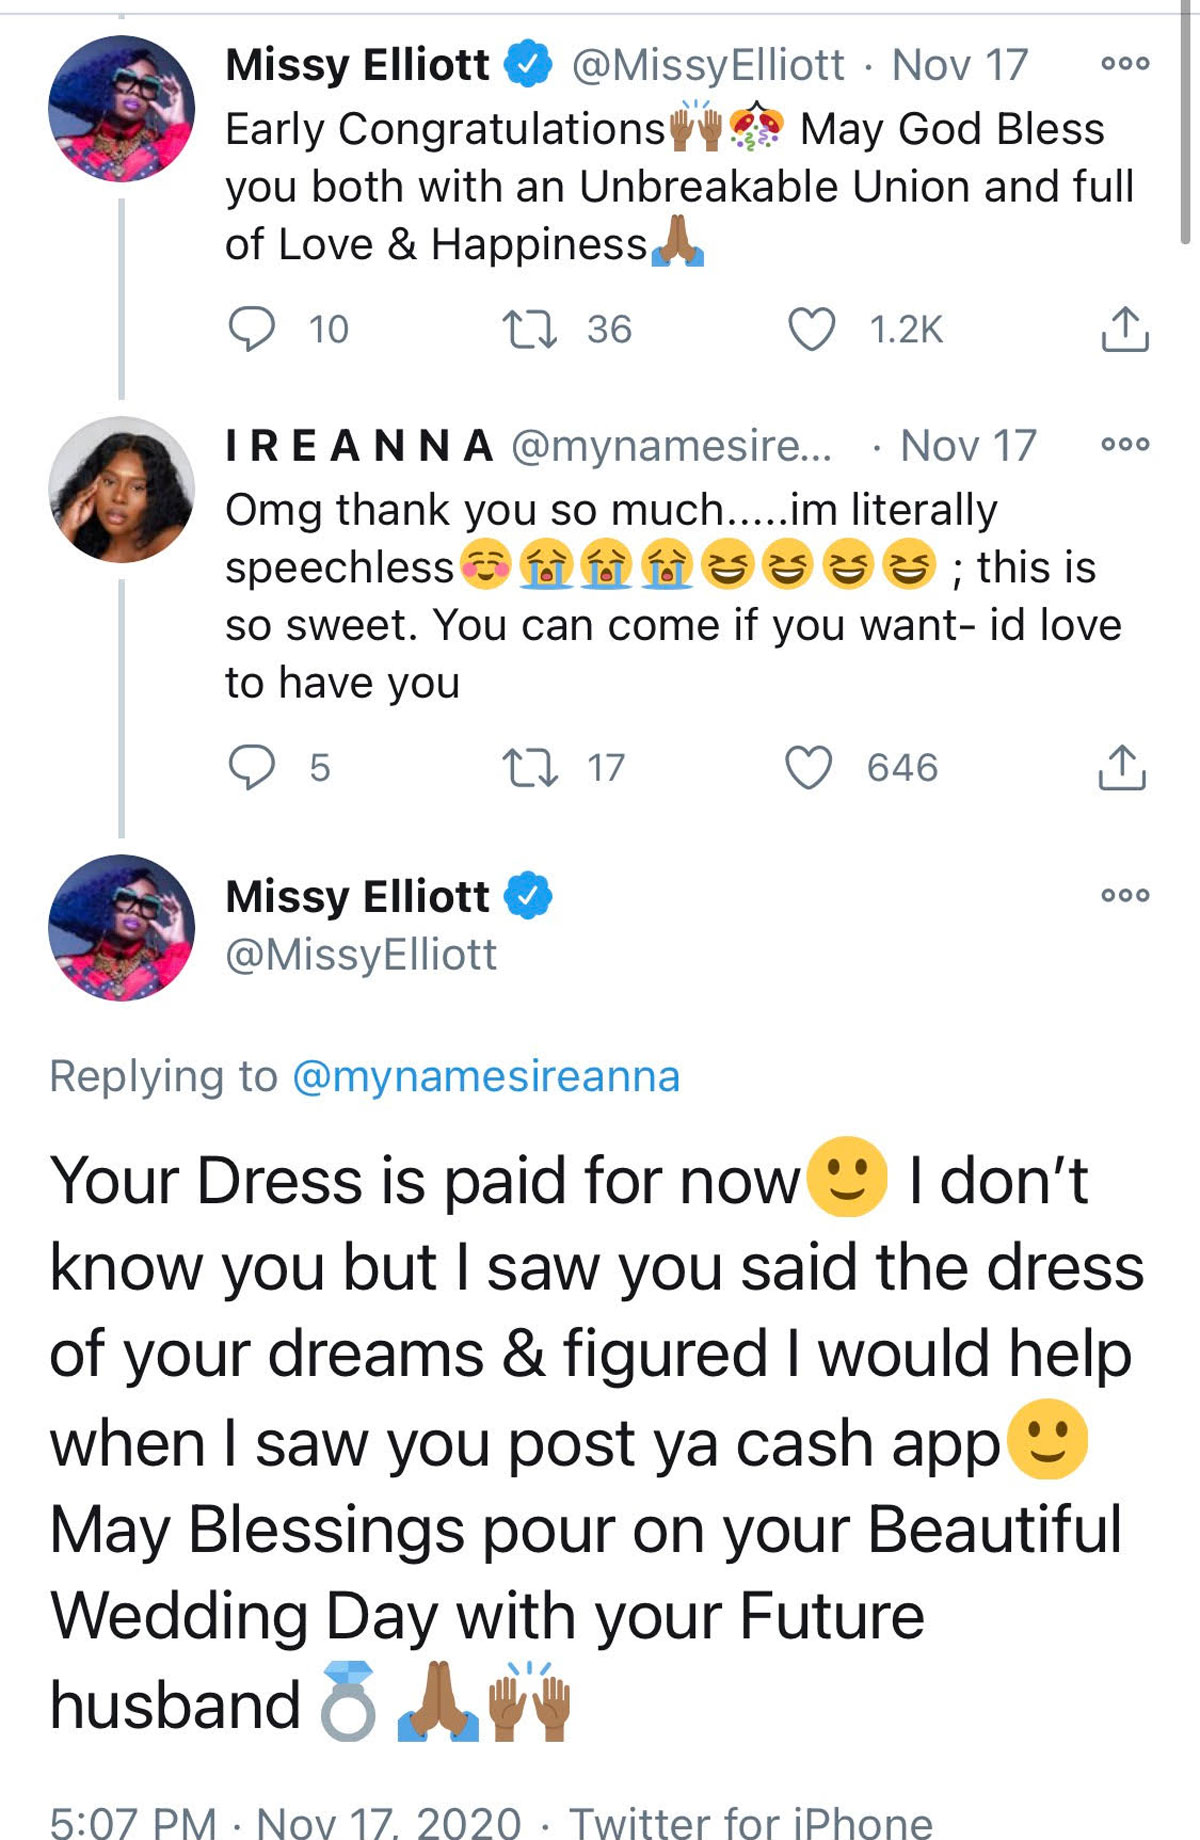 Missy Elliott responds to Twitter user's request for wedding dress